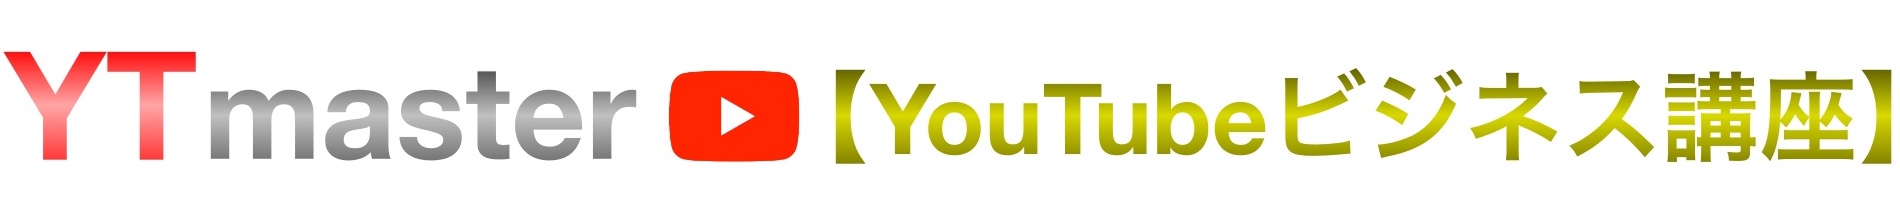 Youtube動画の右下に透かしロゴアイコンを表示させる方法 Ytmaster Youtubeビジネス講座